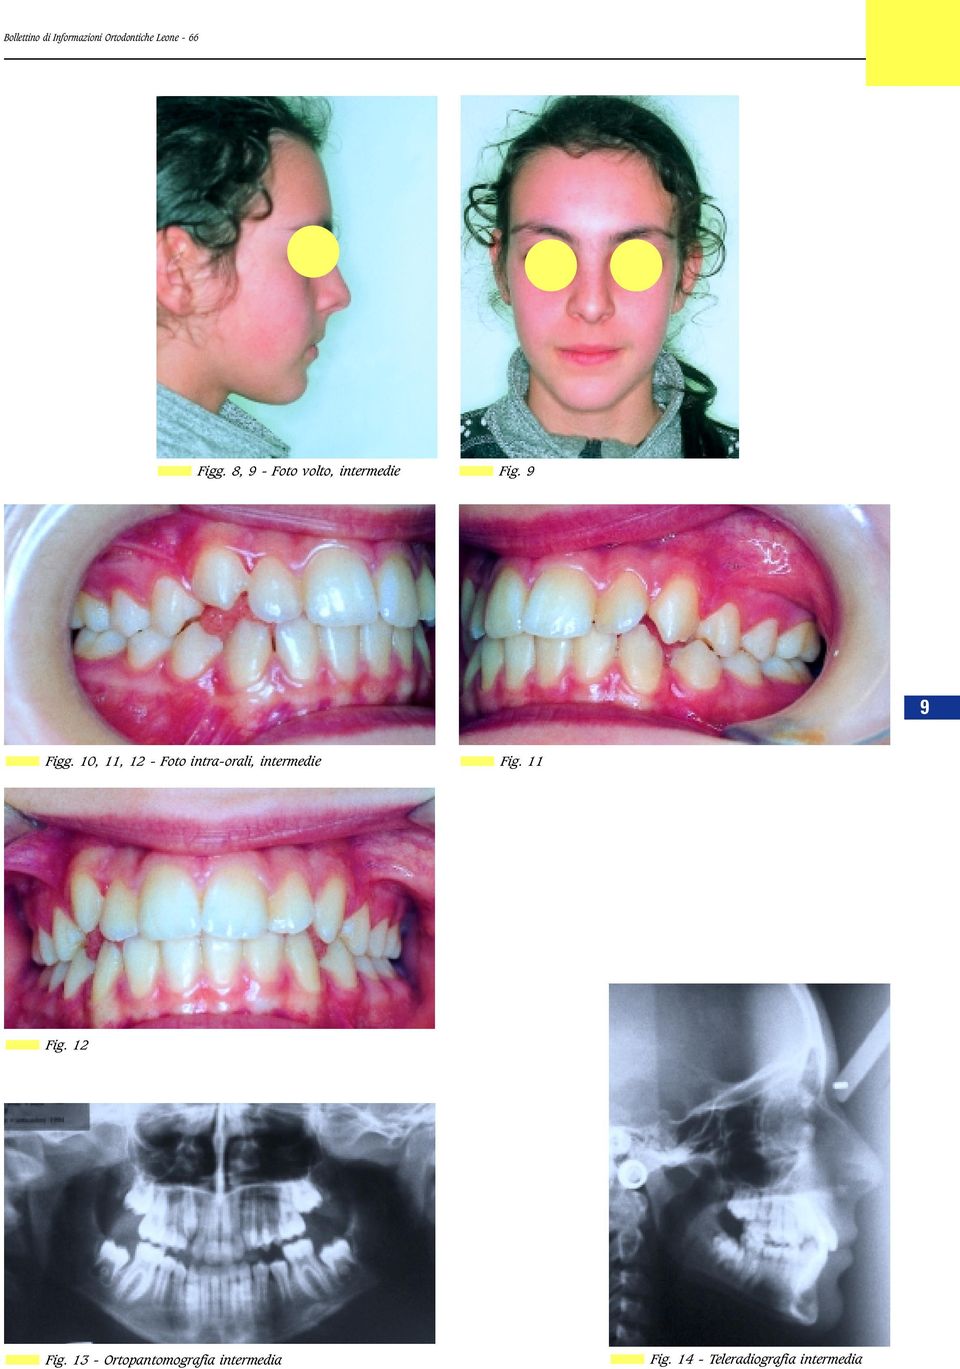 10, 11, 12 - Foto intra-orali, intermedie Fig.